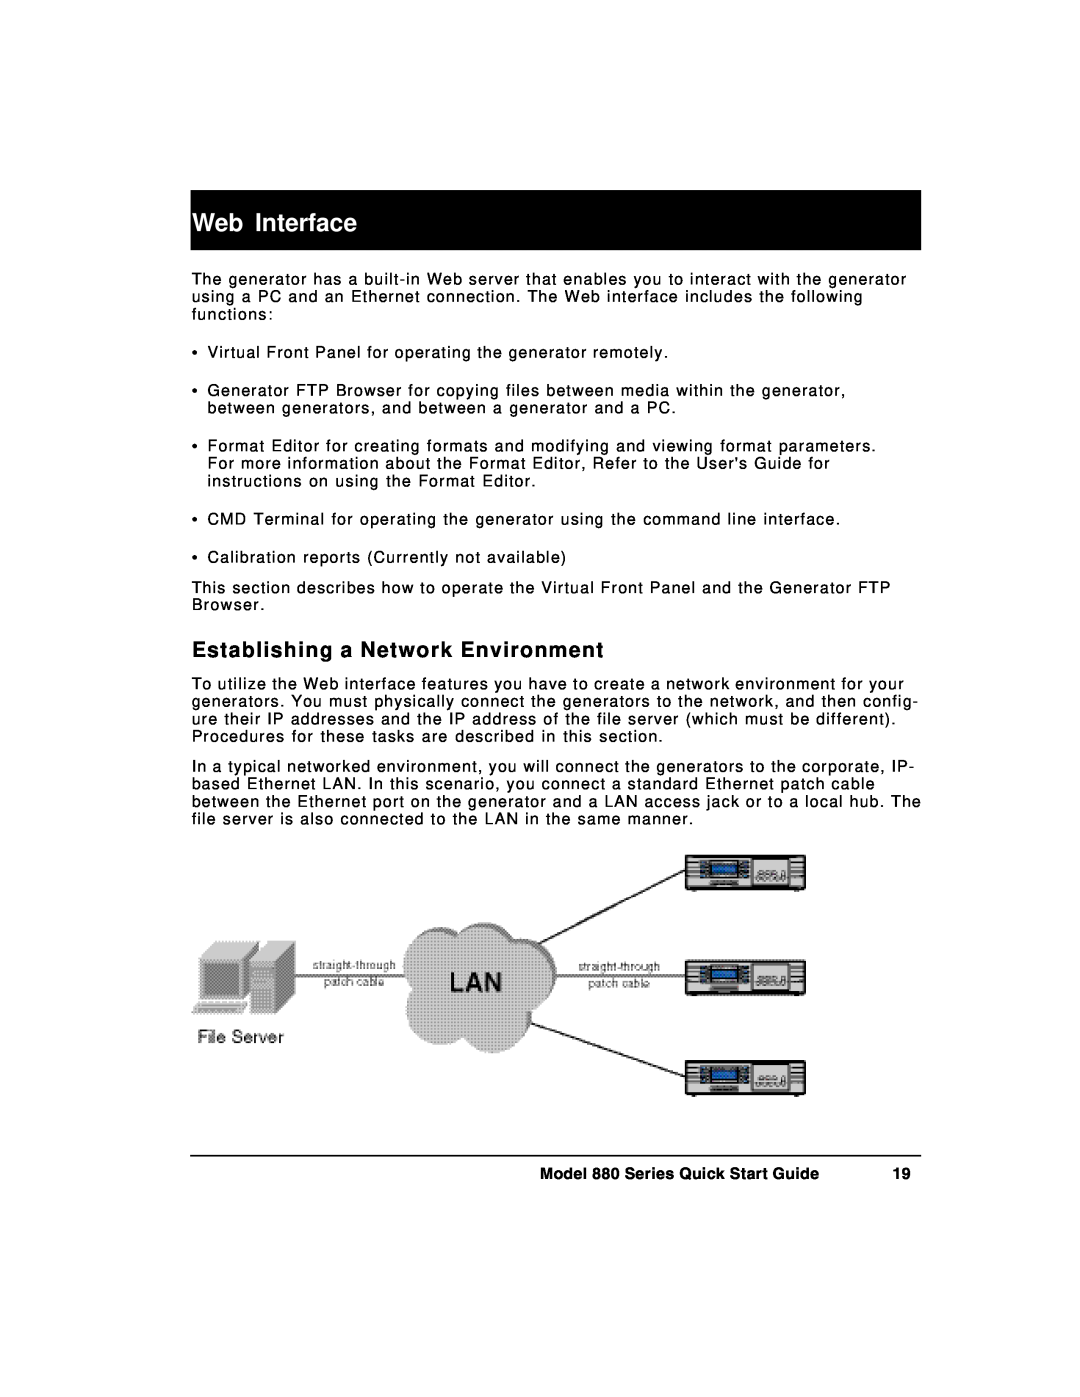 Quantum Data quick start Web Interface, Establishing a Network Environment, Model 880 Series Quick Start Guide 